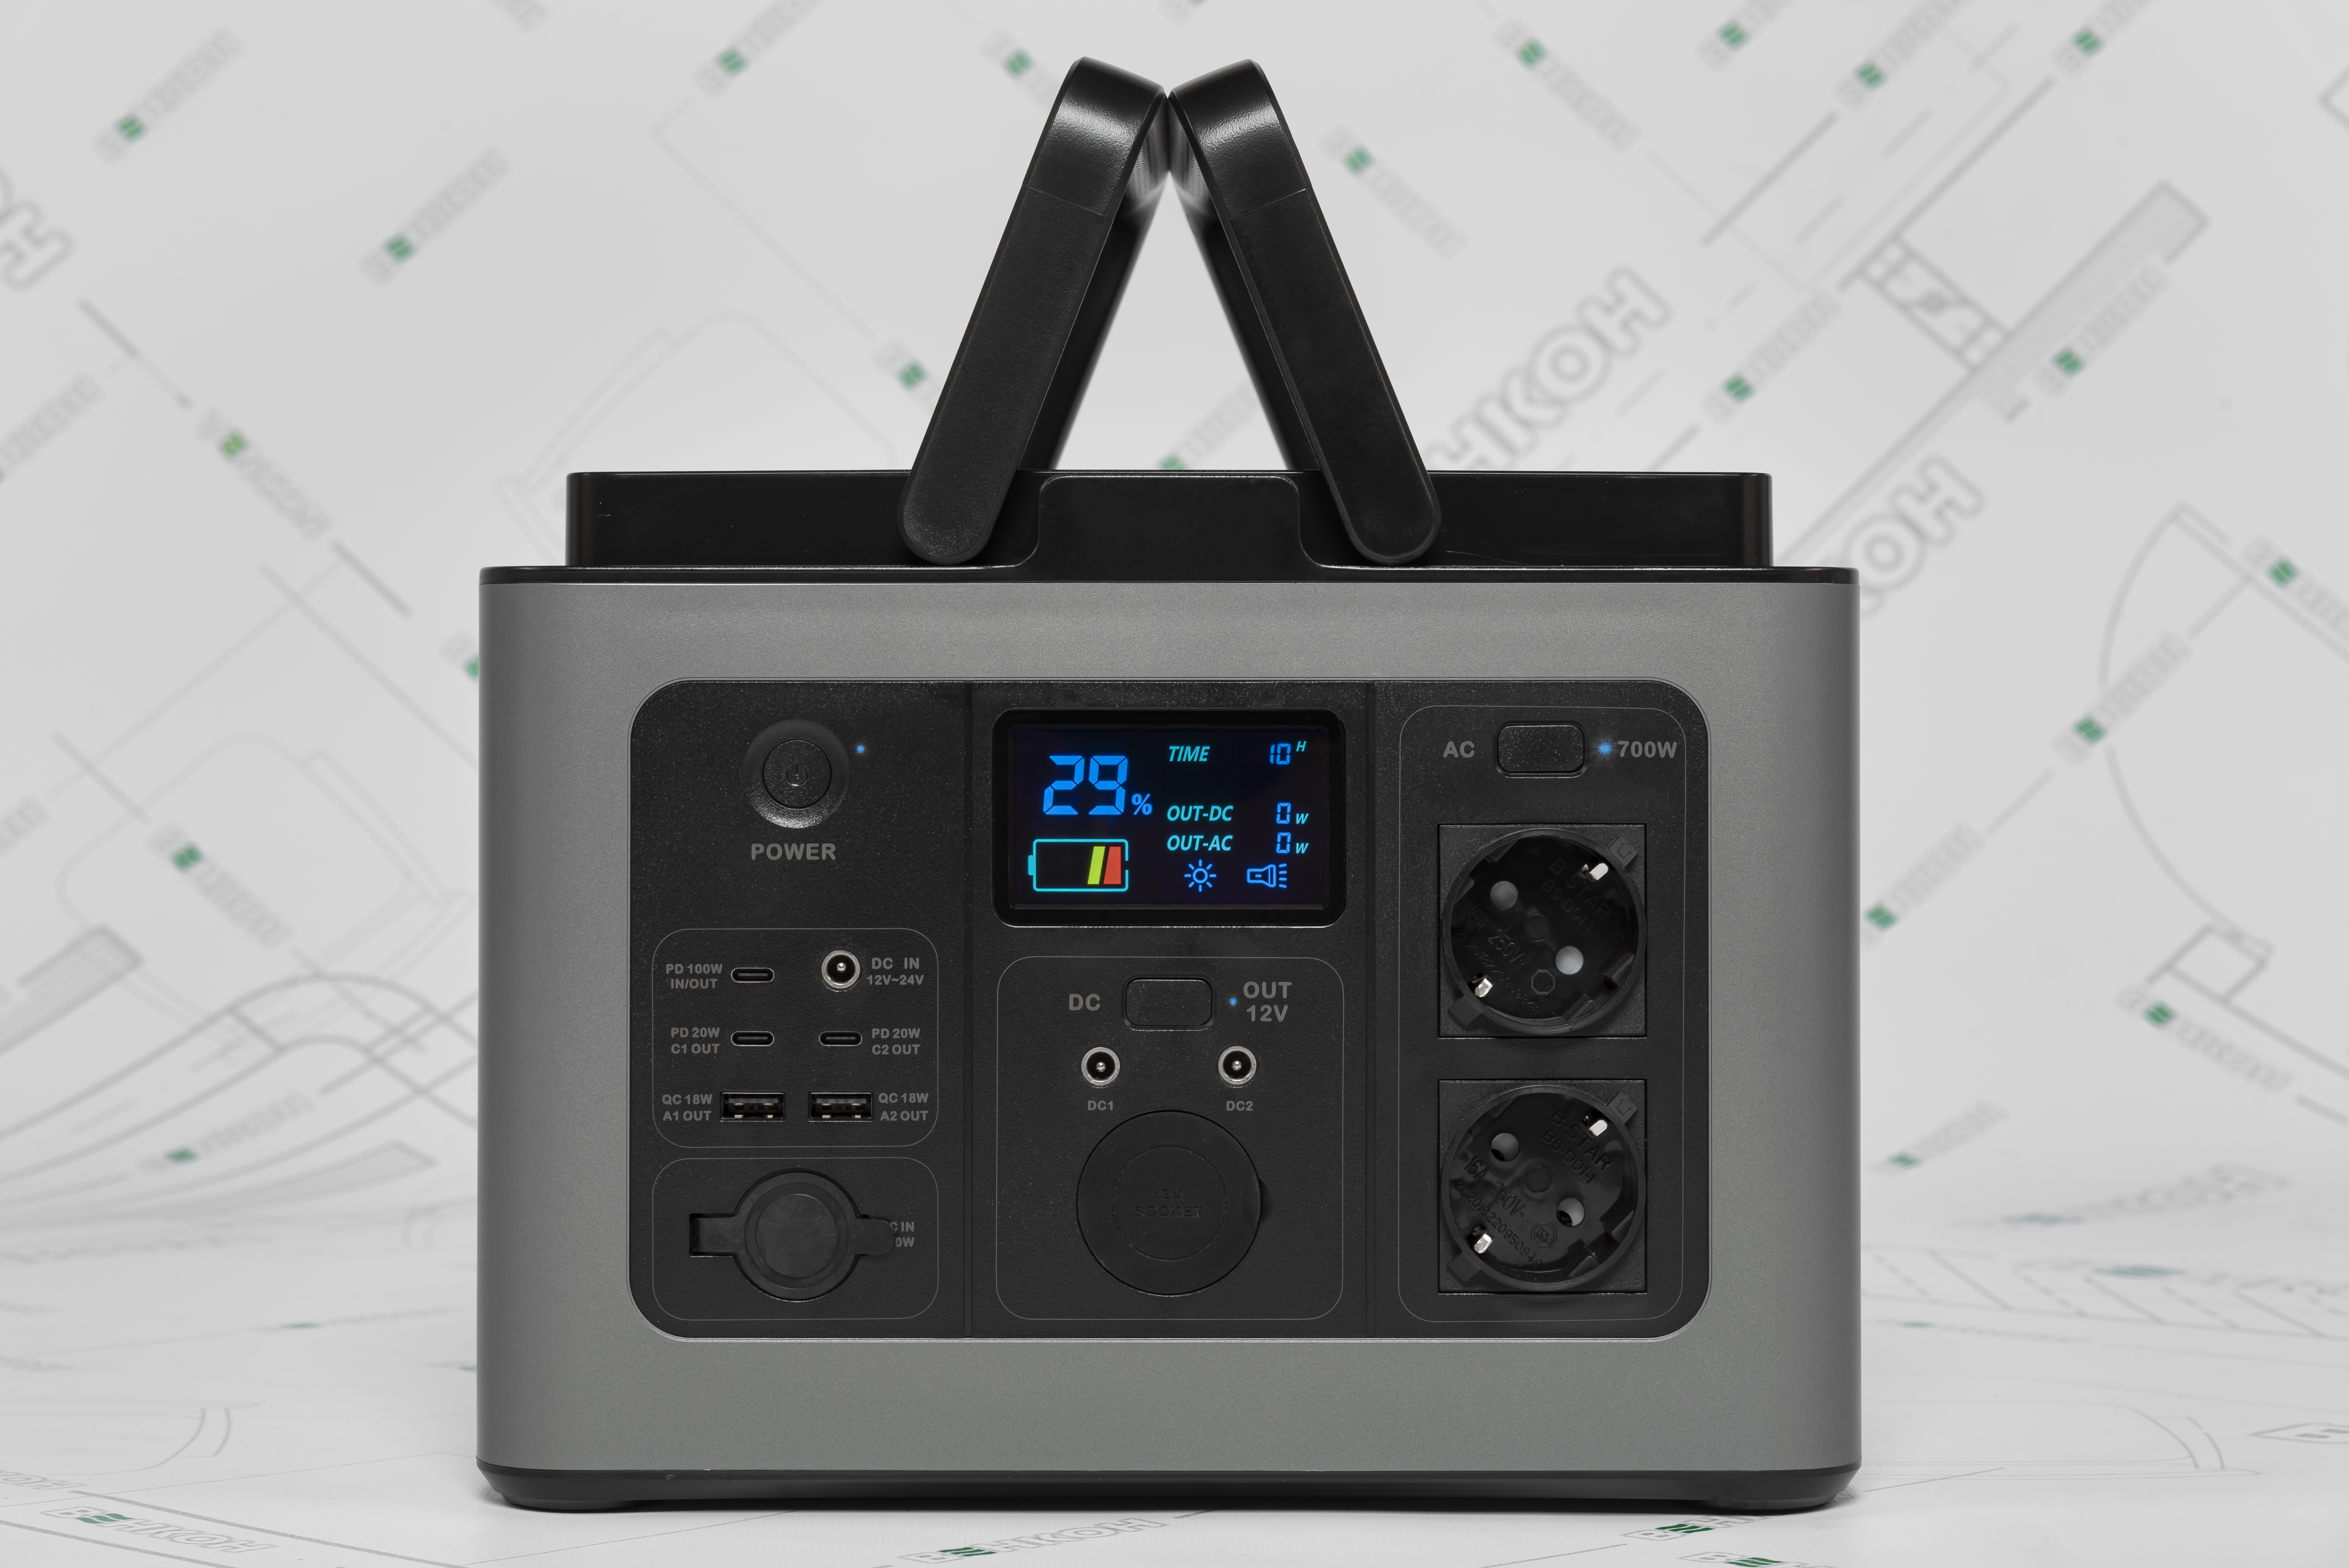 Портативная зарядная станция LogicPower Charger MPPT 700 Pro цена 17719.00 грн - фотография 2